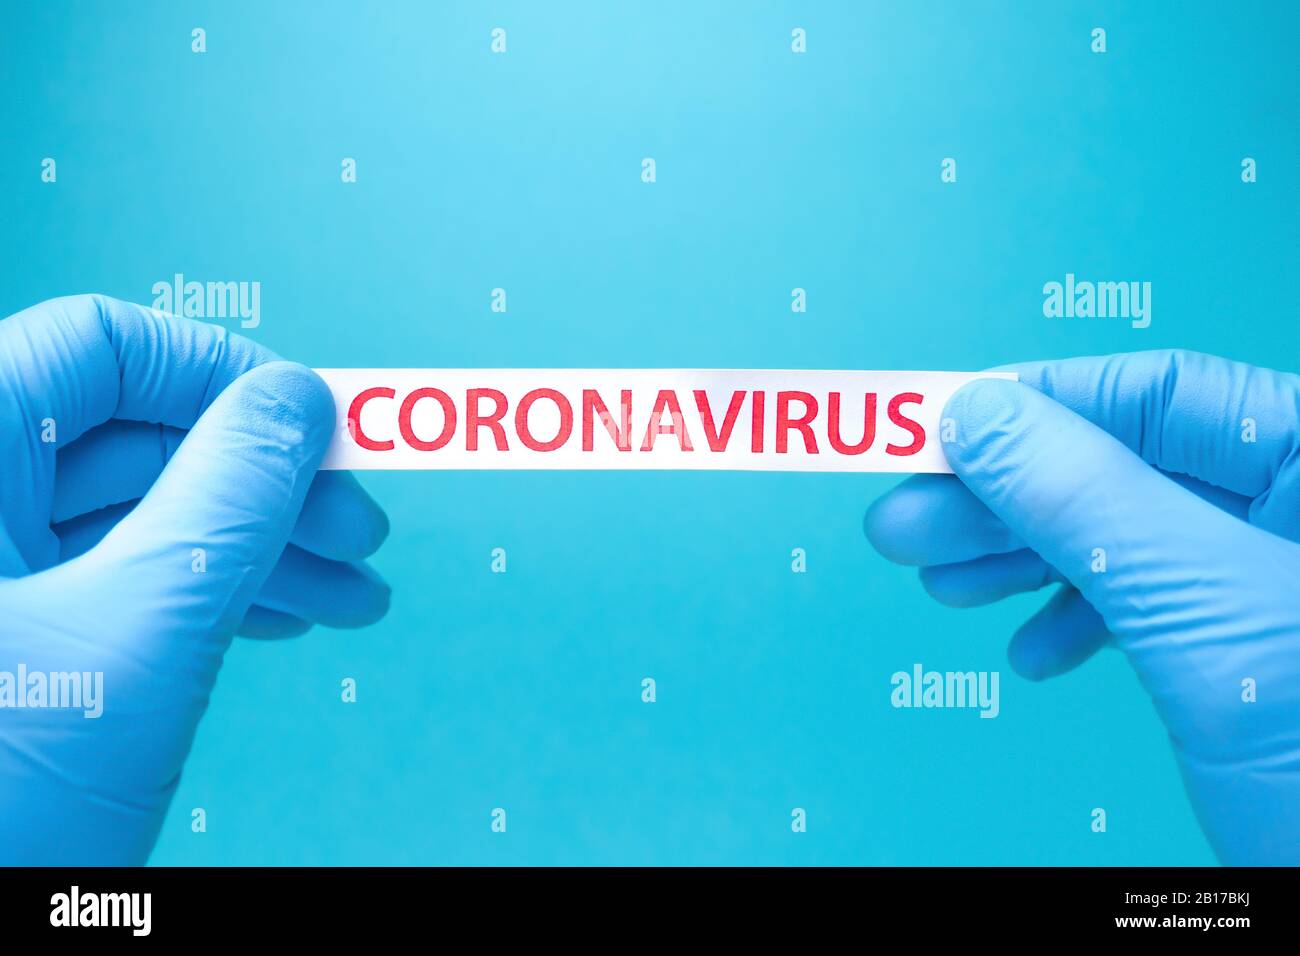 nCoV Coronavirus vaccine for 2019-nCoV COVID virus. Eliminating Coronavirus. Stop spreading Coronavirus. Coronavirus 2019-nCoV COVID concept. Epidemic, vaccine saving life. Healthcare background Stock Photo